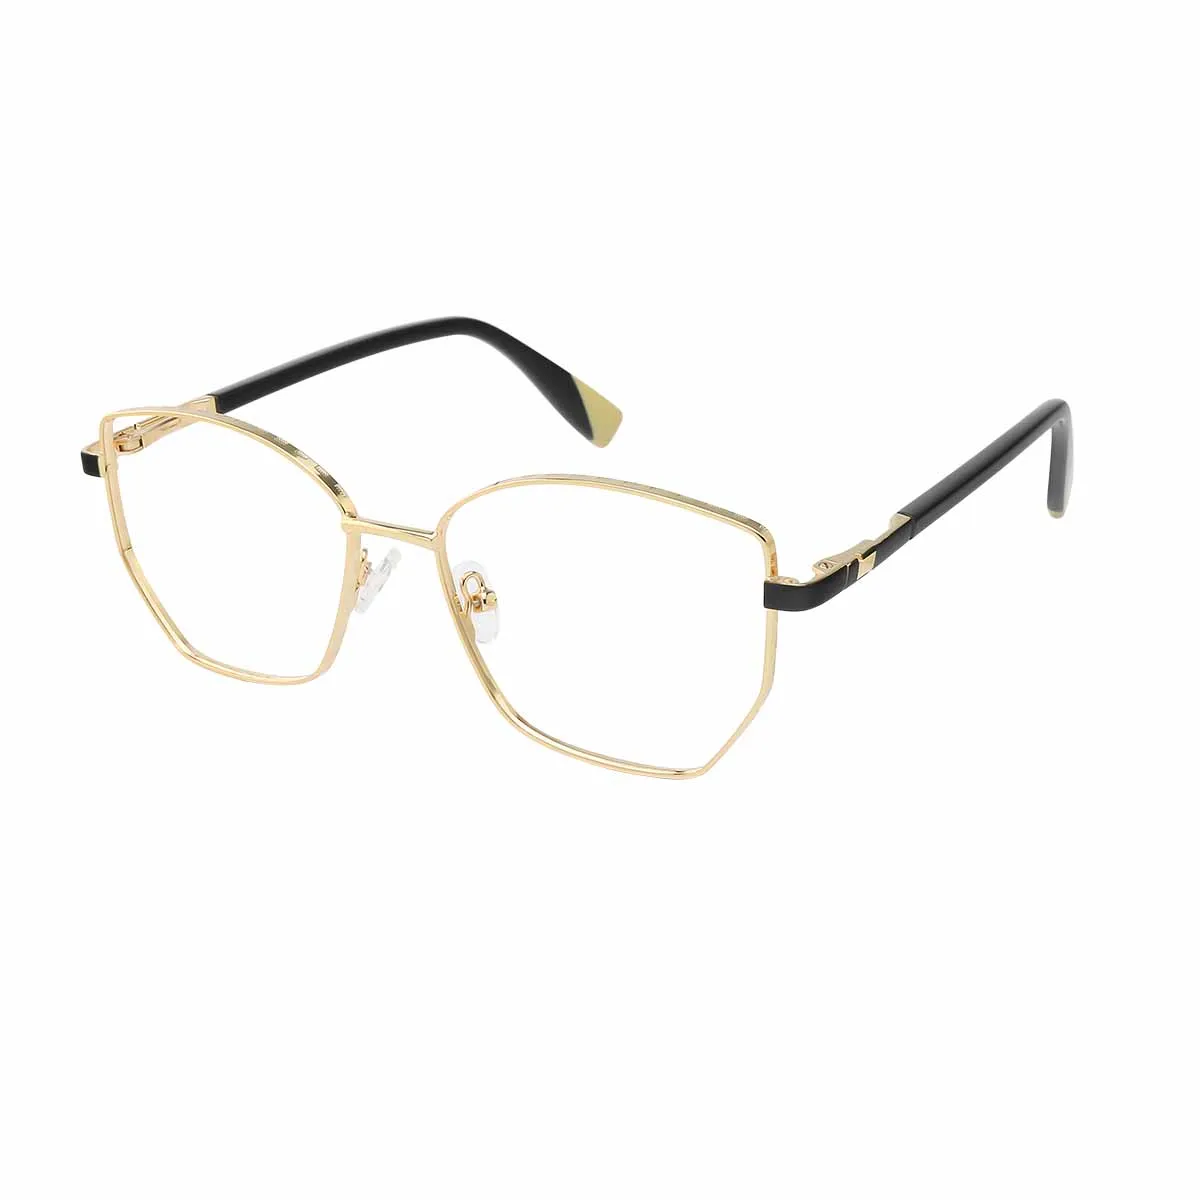 Fashion Geometric Gold/Black Glasses for Women